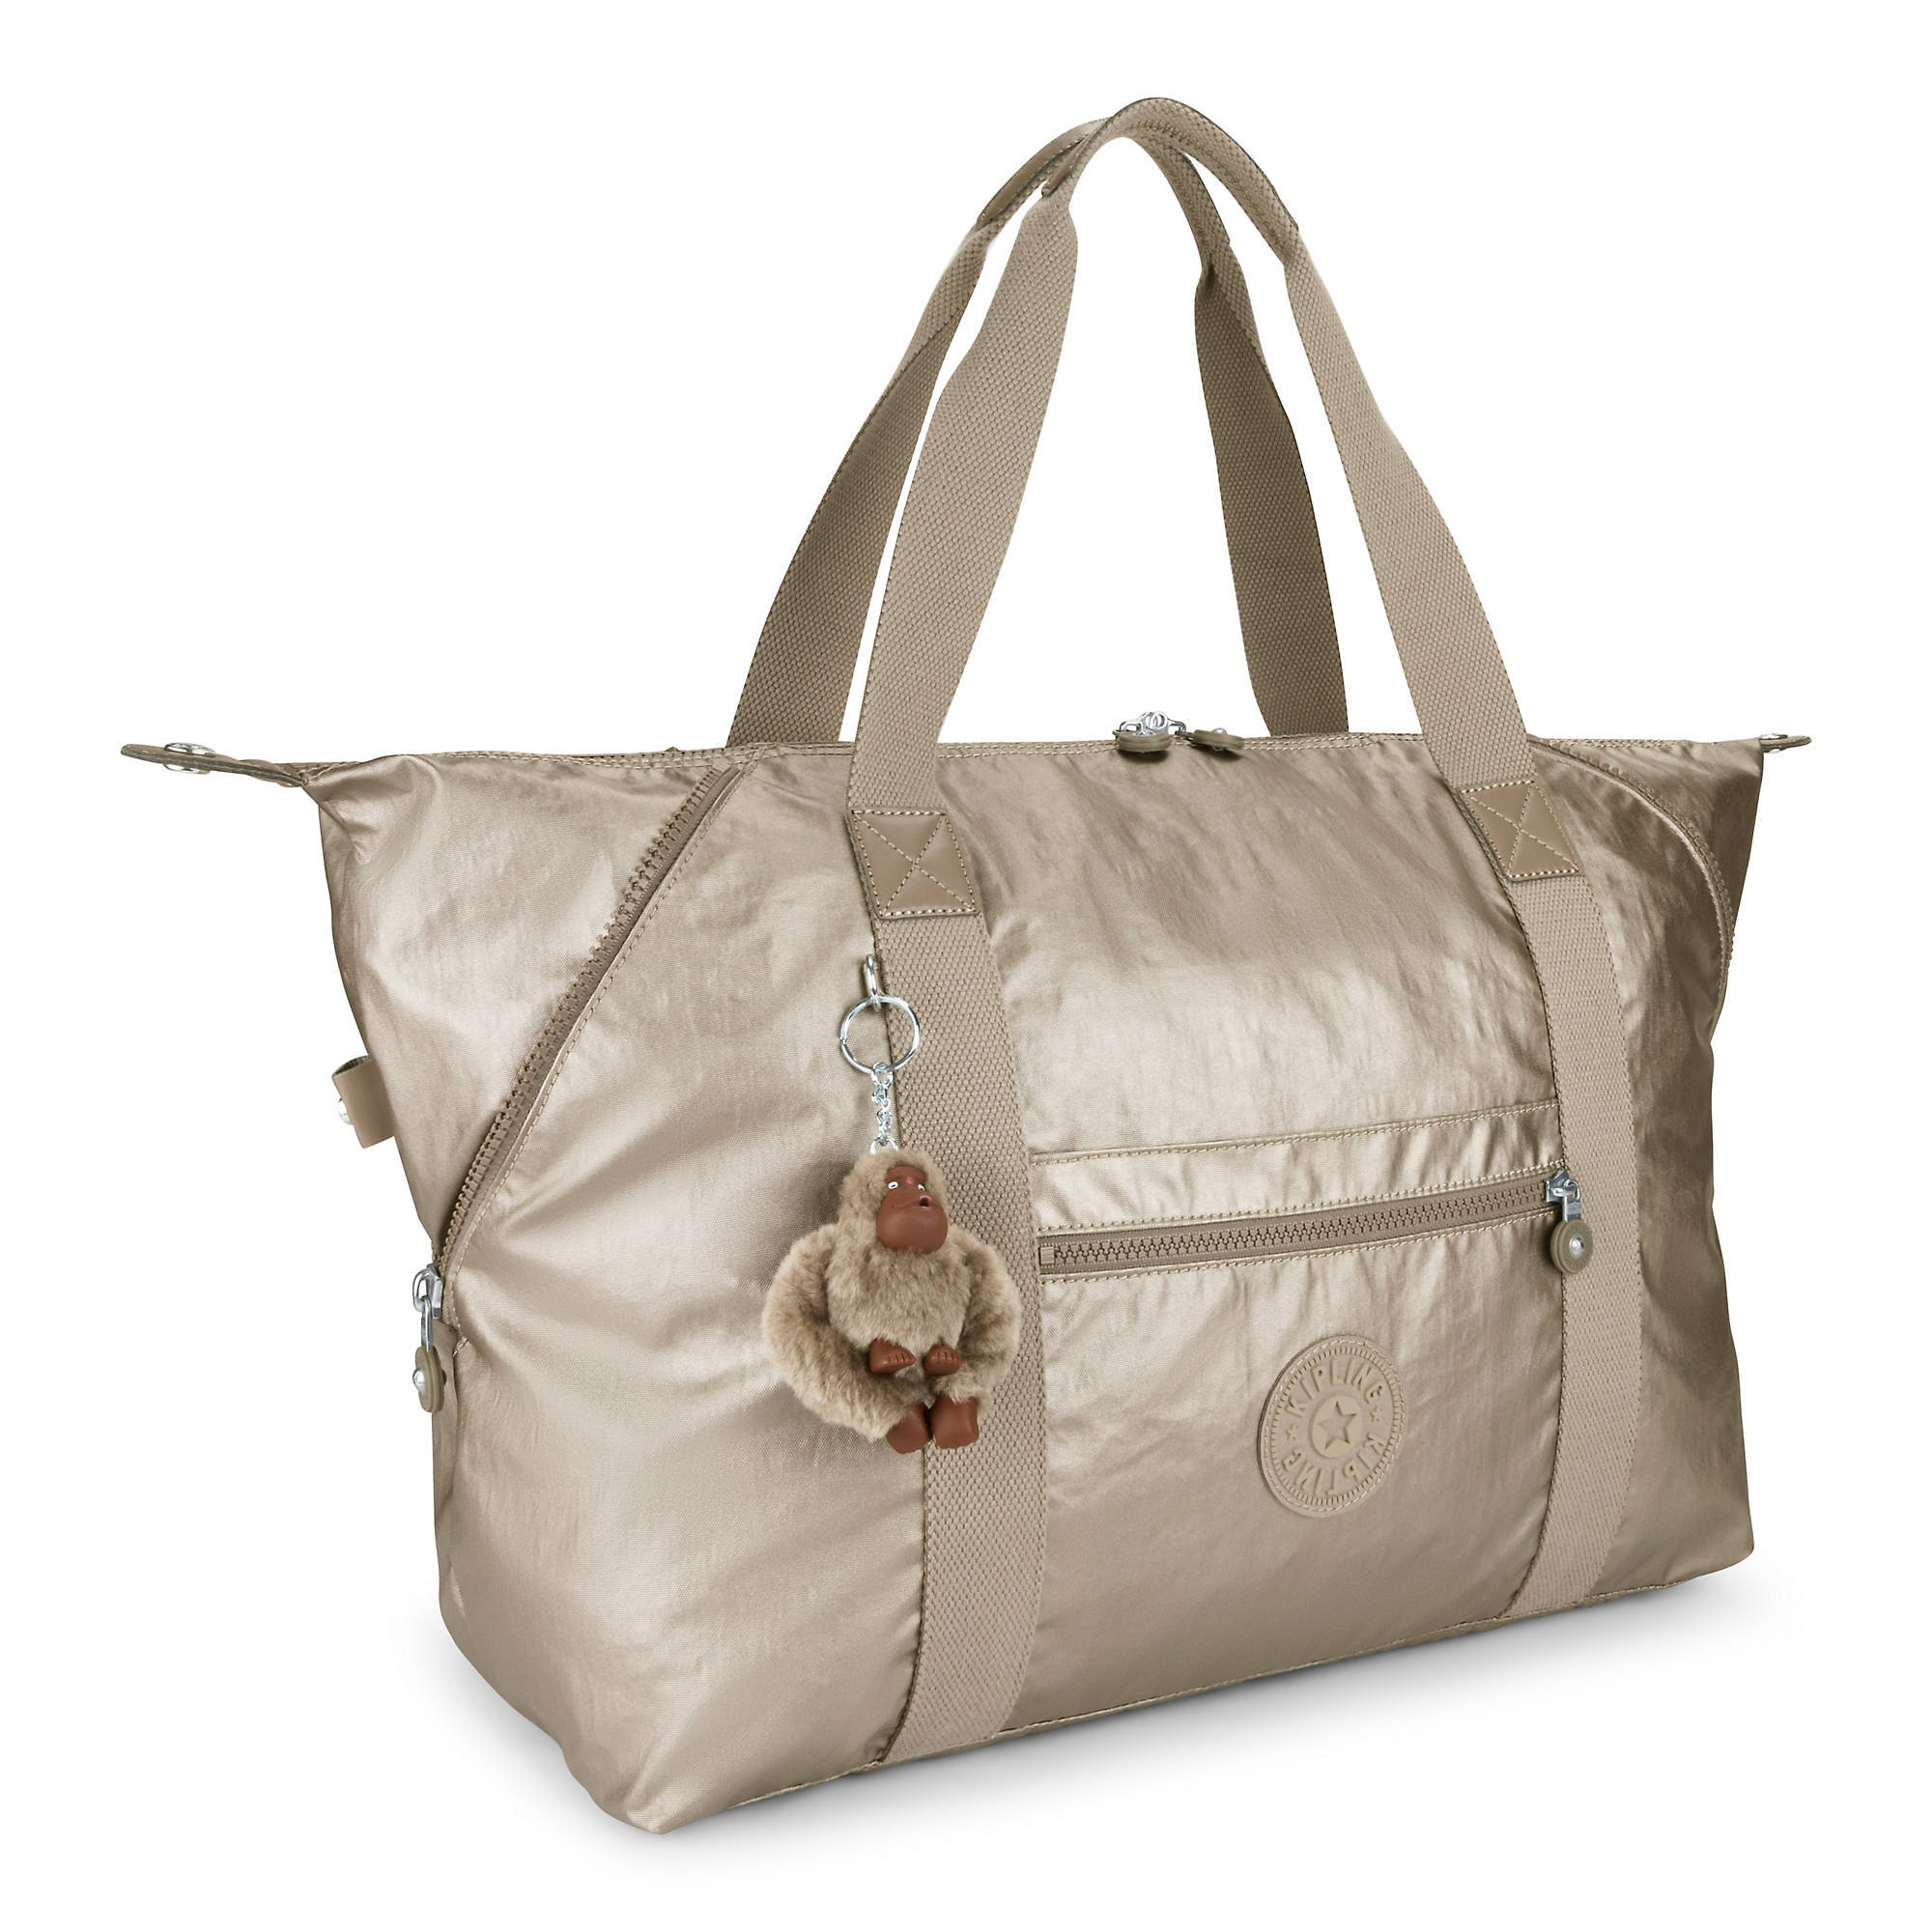 Kipling Art Medium Metallic Tote Bag | eBay